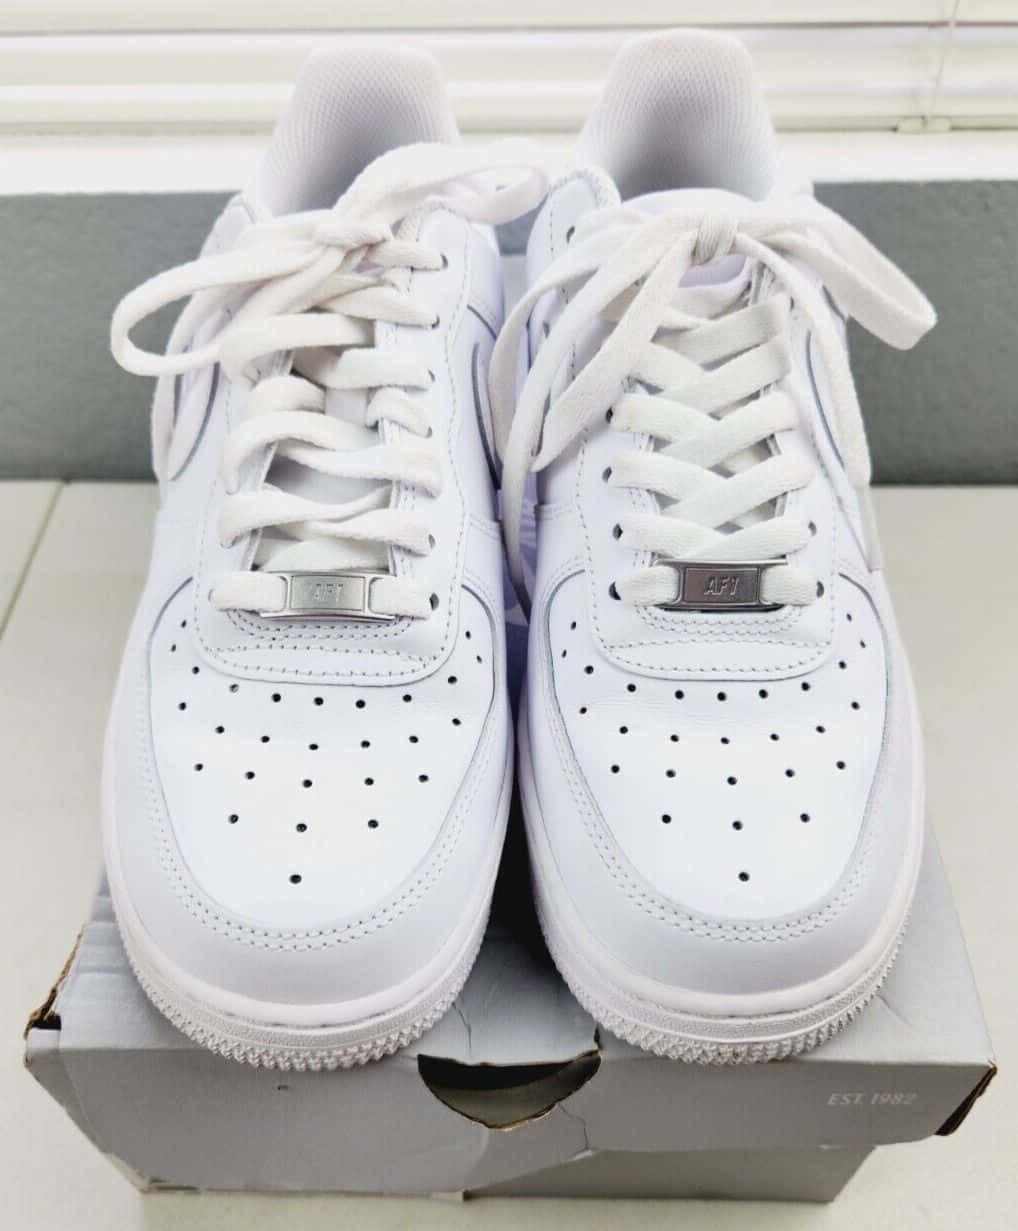 Imagenfrontal De Nike Air Force 1 En Color Blanco